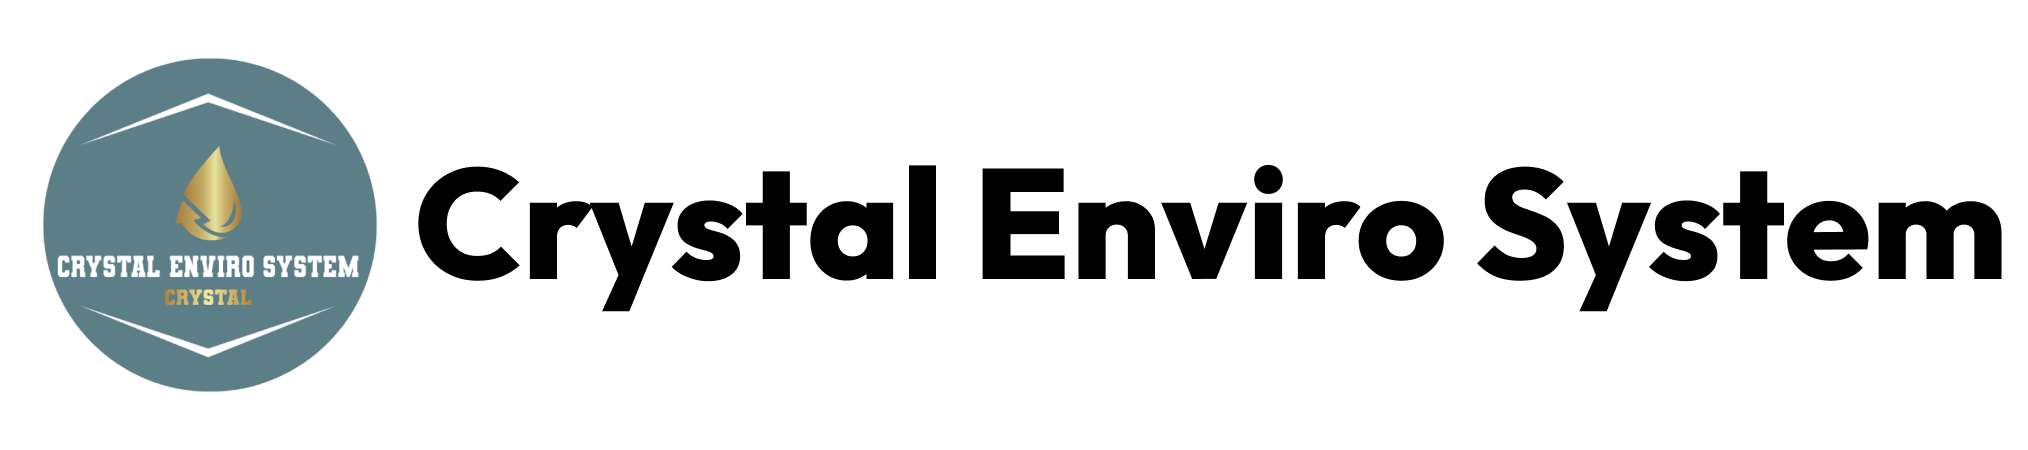 crystal enviro logo